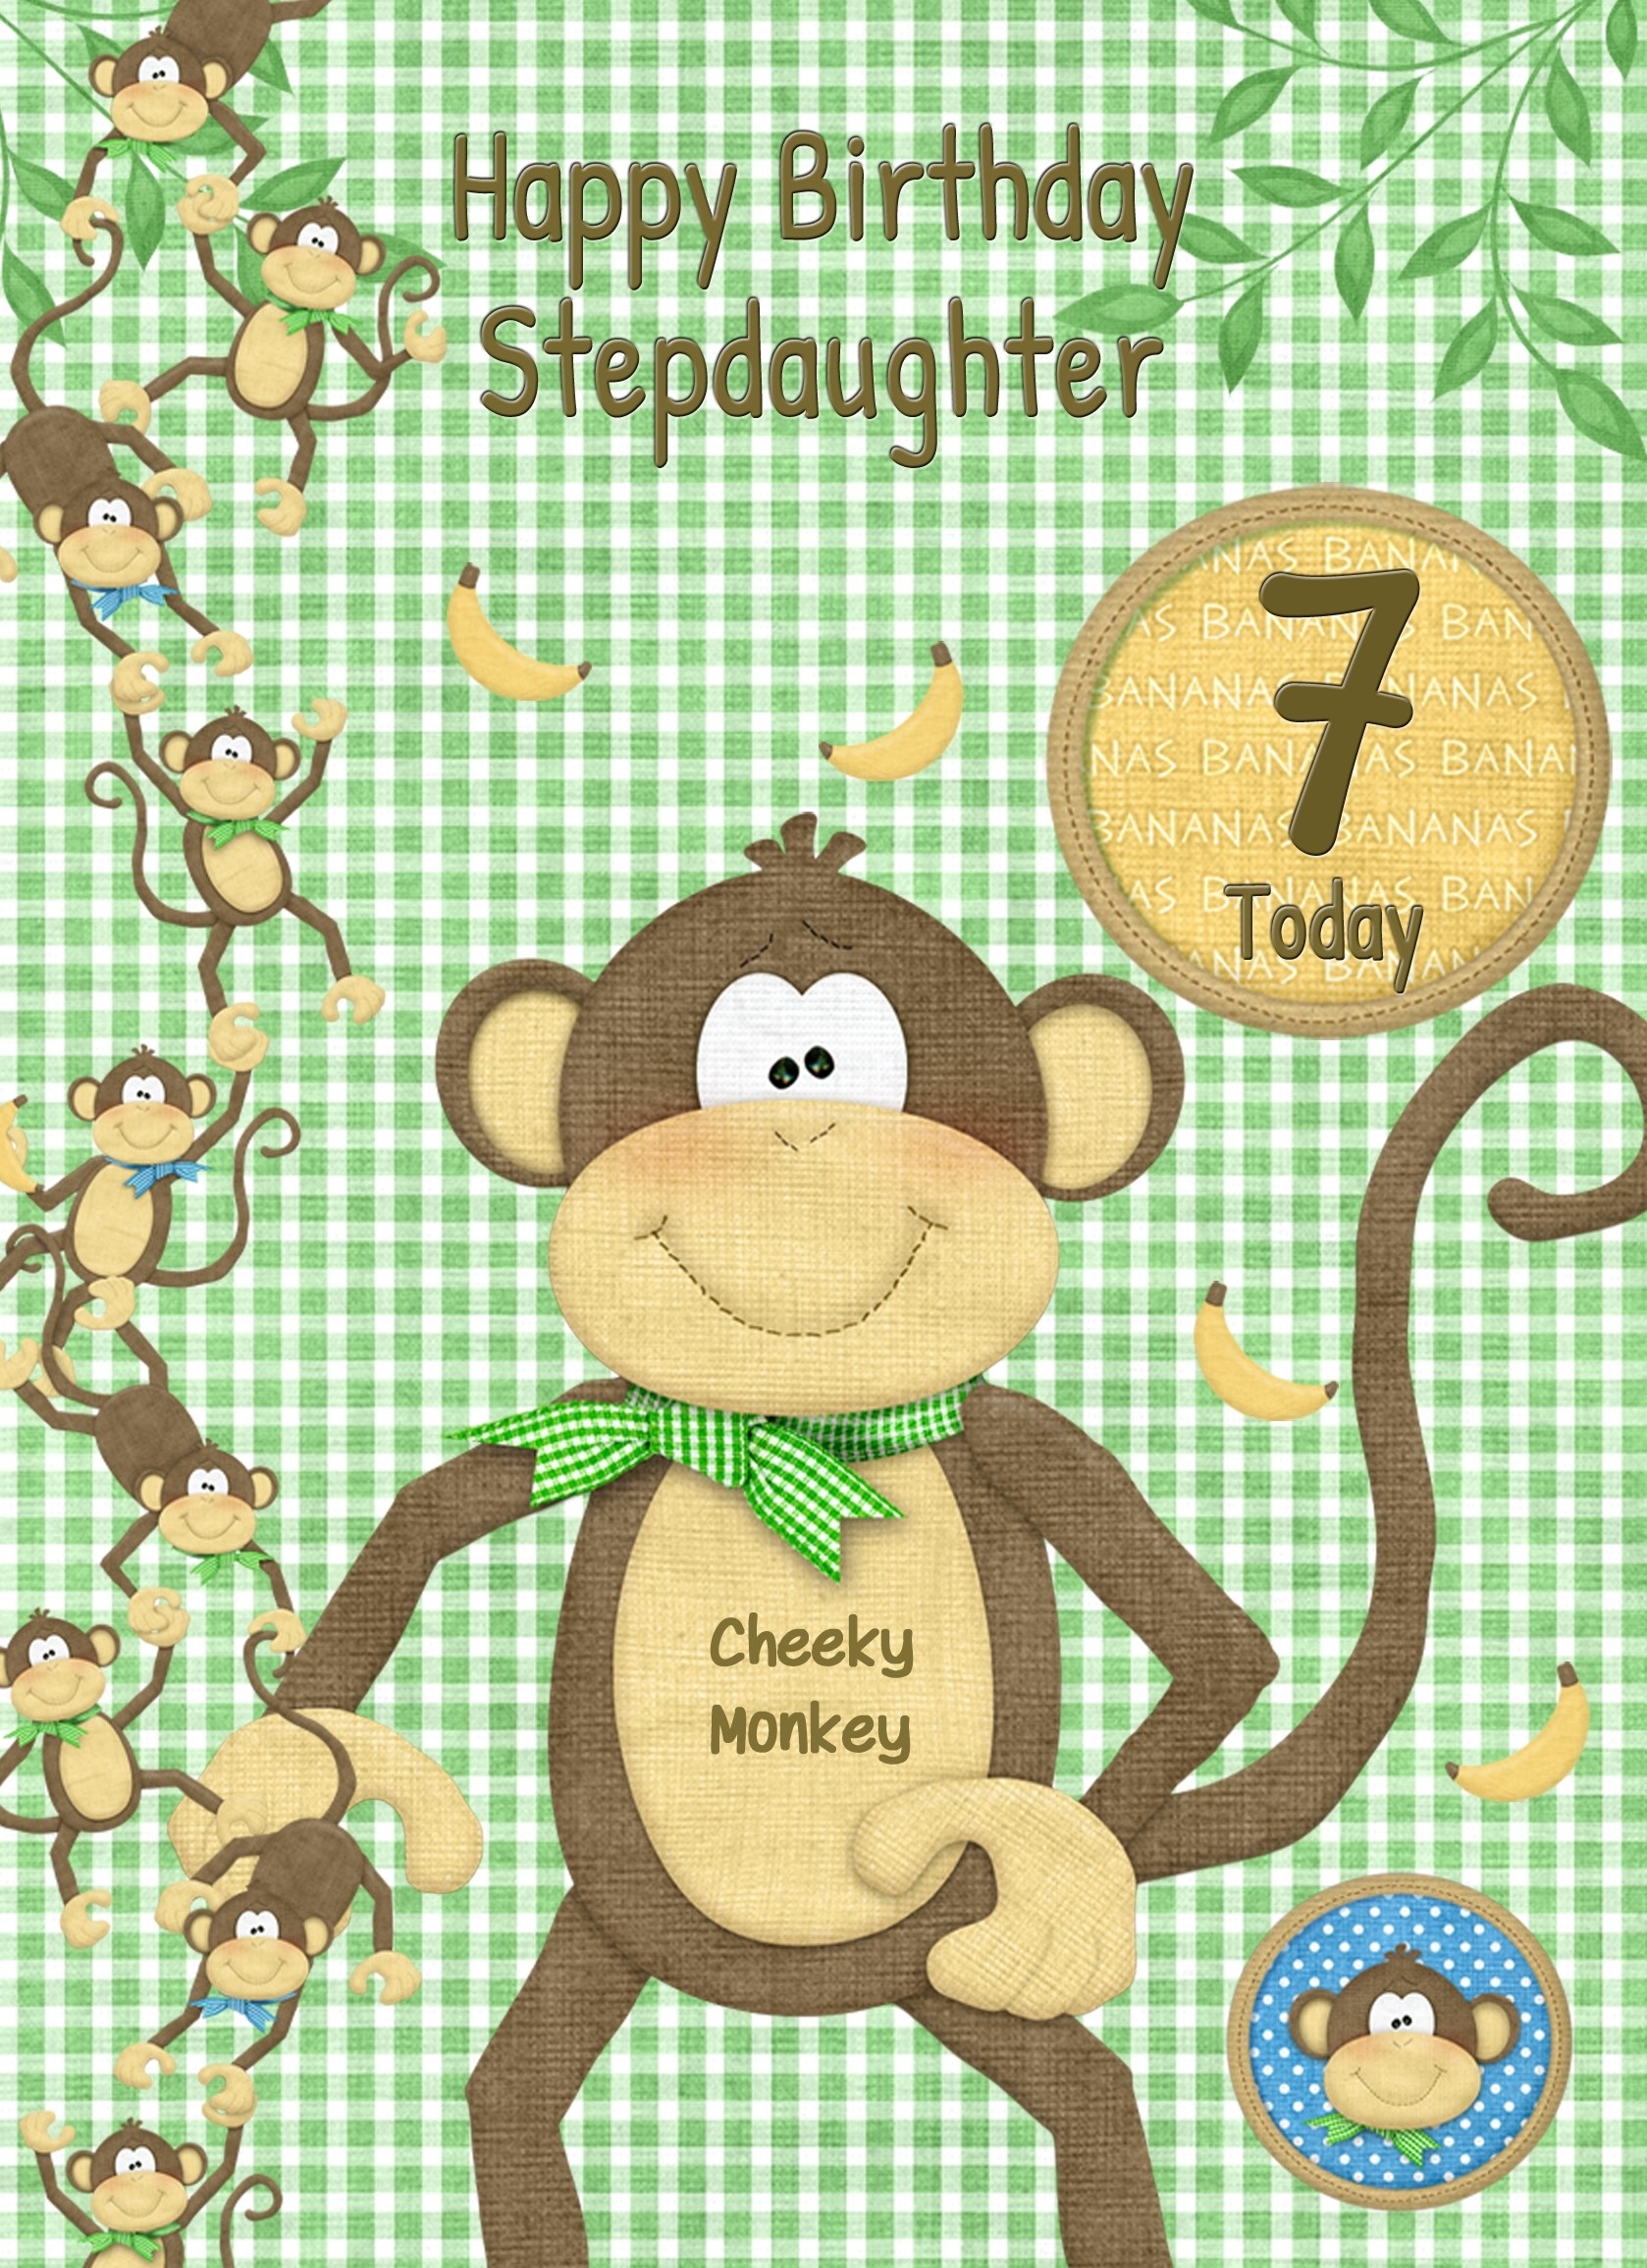 Kids 7th Birthday Cheeky Monkey Cartoon Card for Stepdaughter